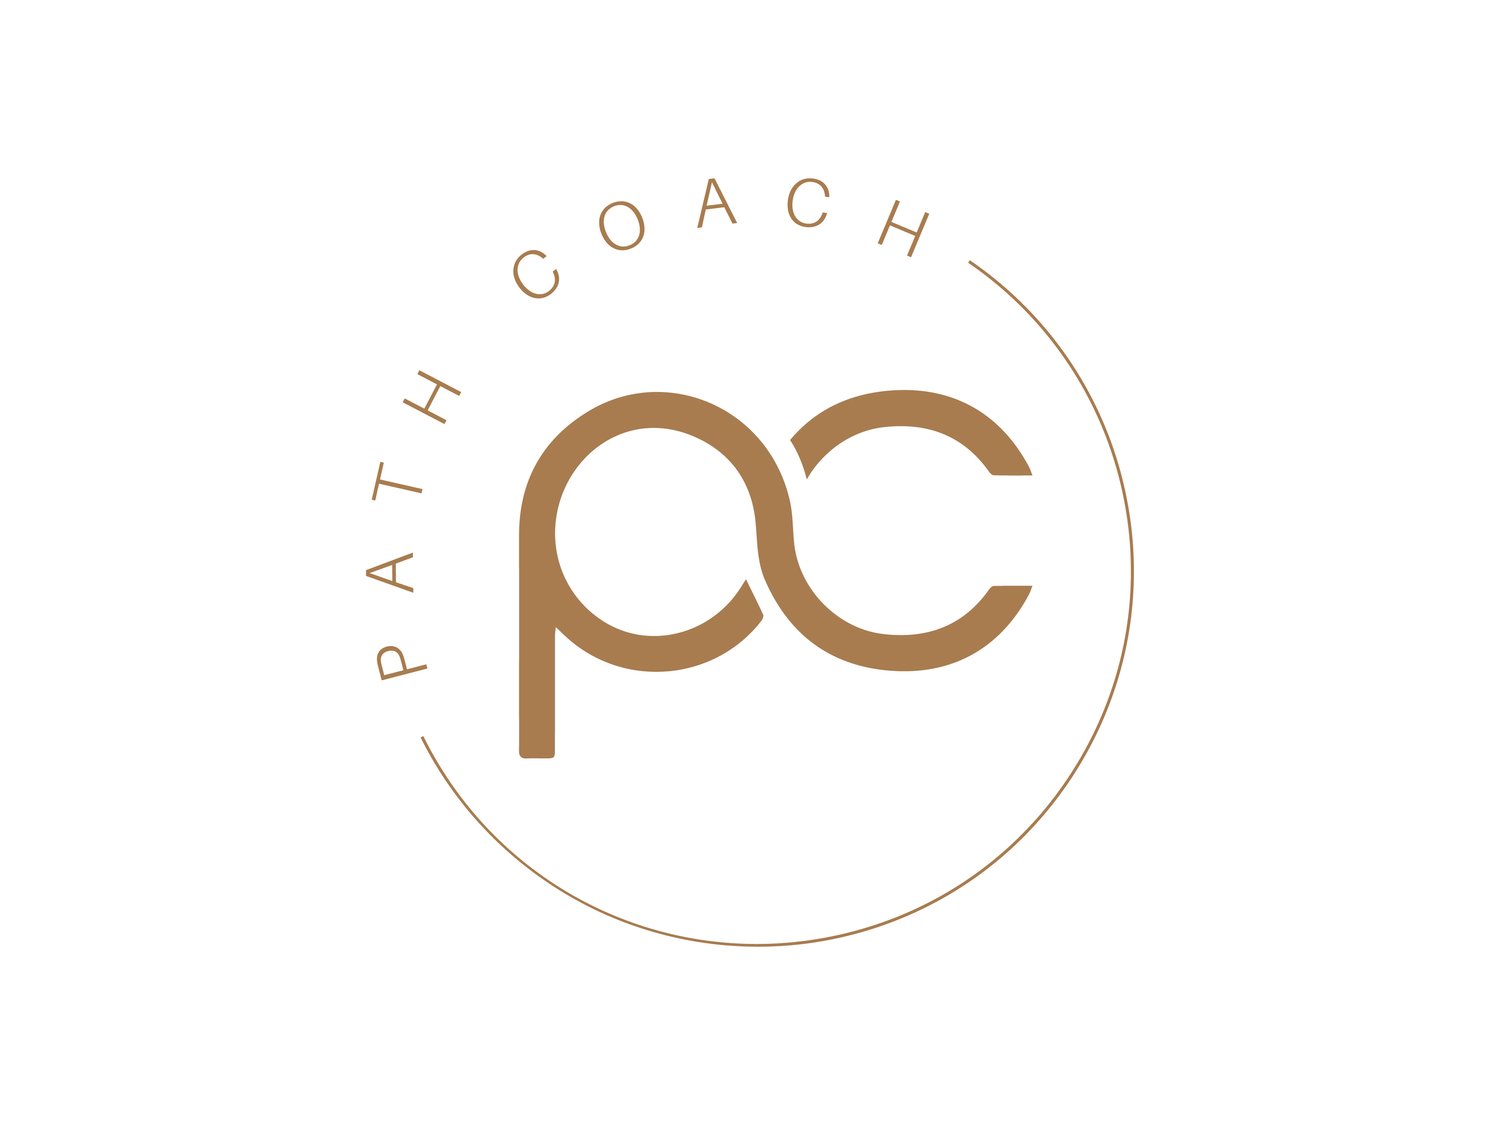 PathCoach